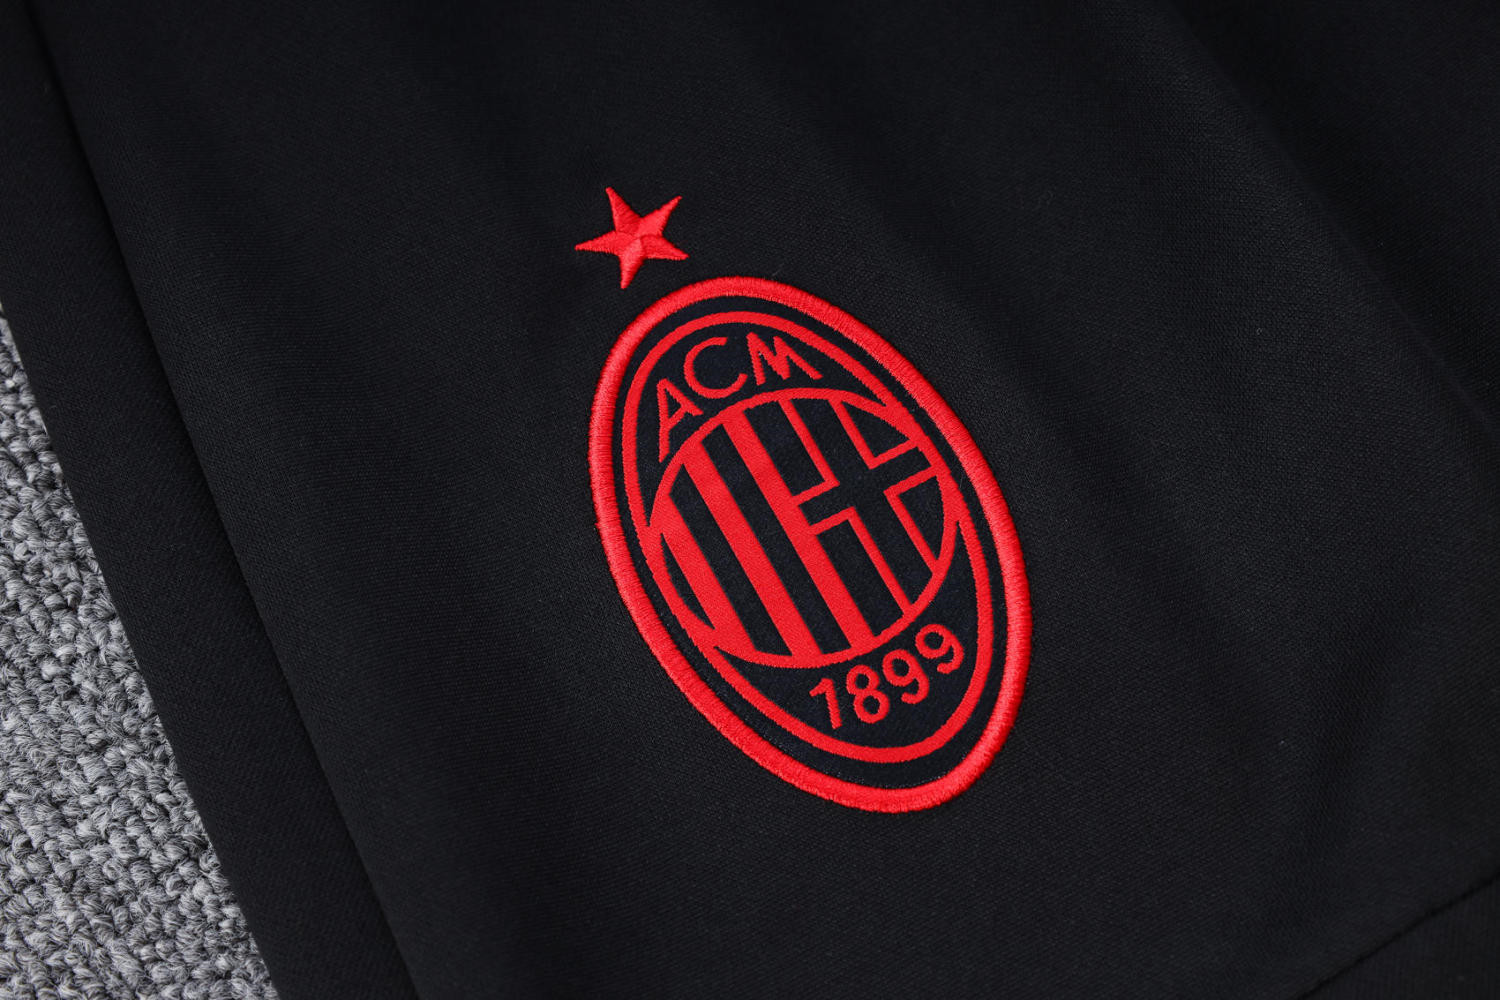 AC Milan Soccer Jacket + Pants Replica Full Black 2022/23 Mens